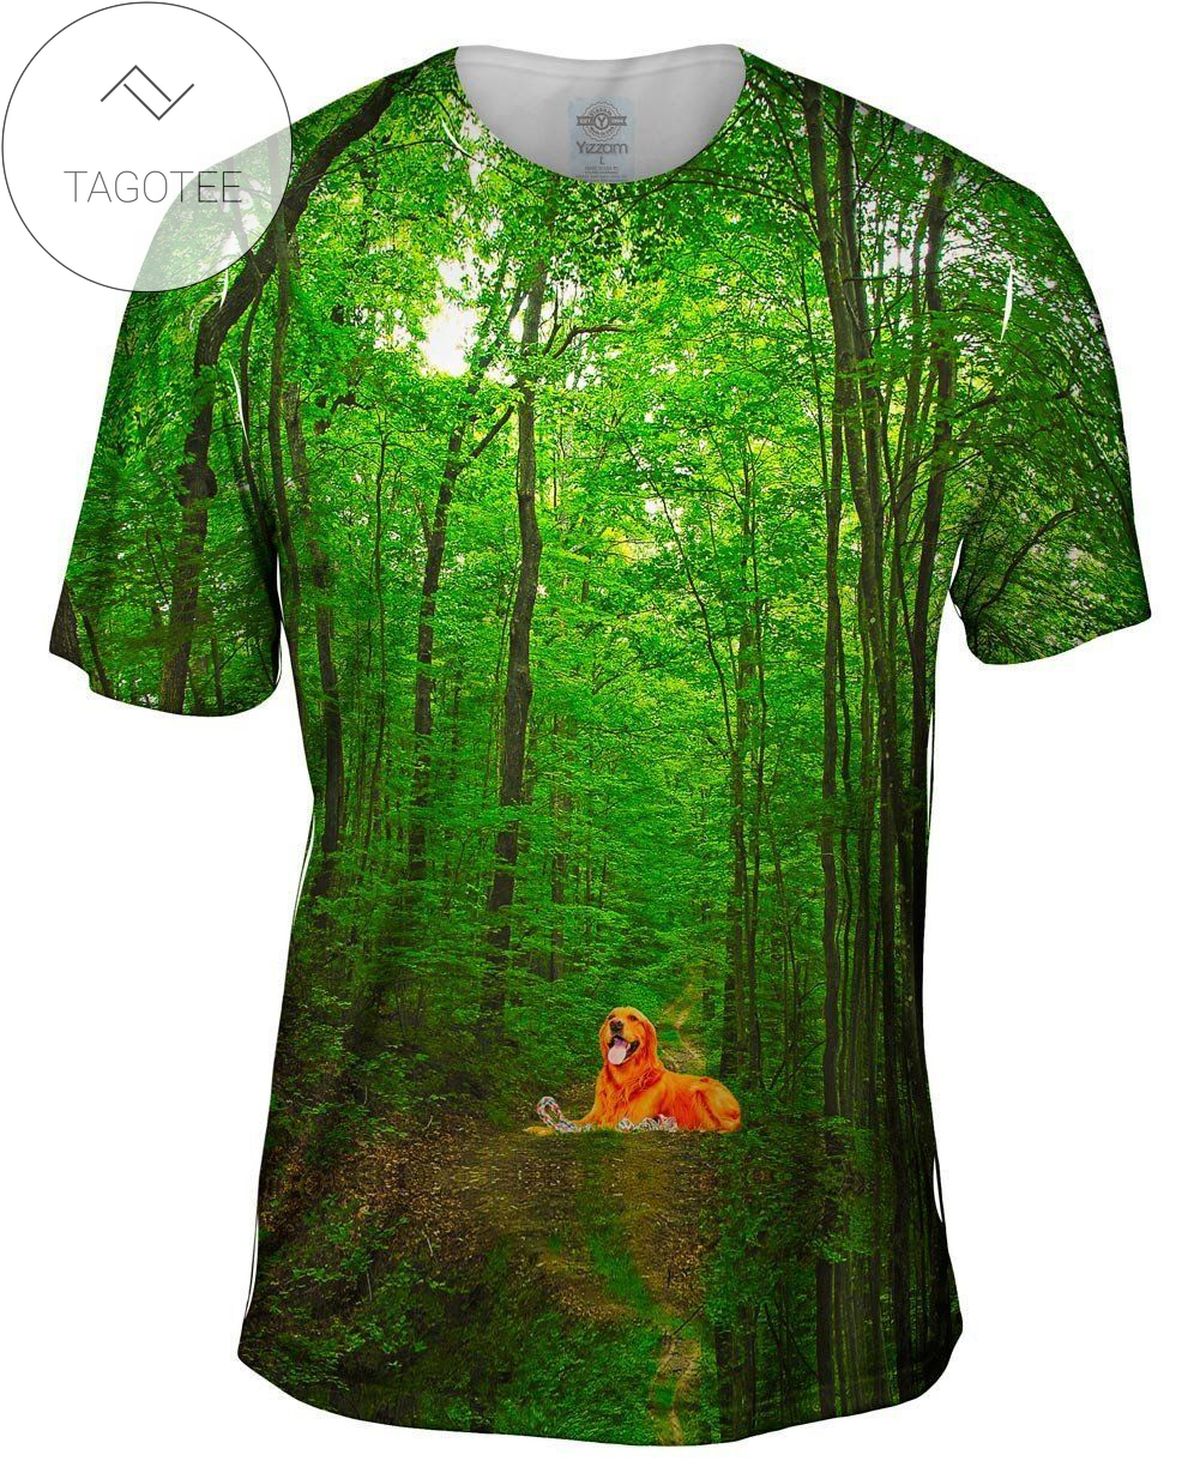 Golden Retriever Forest Mens All Over Print T-shirt